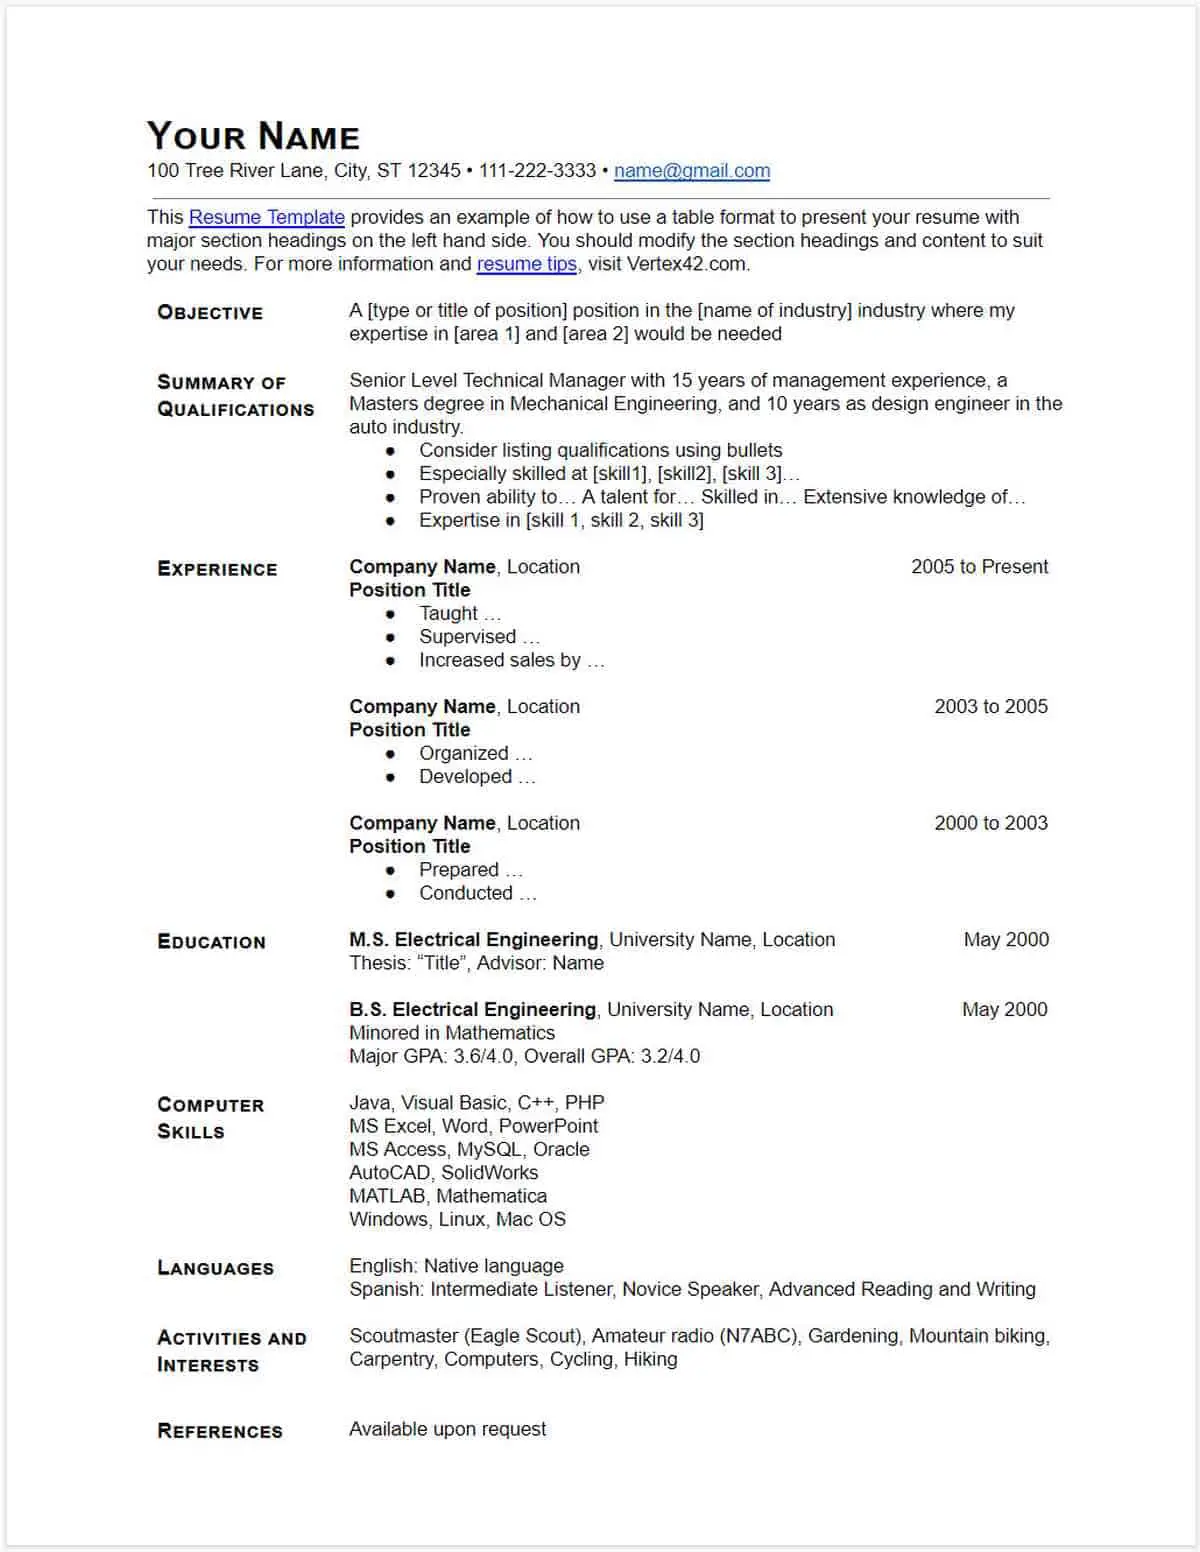 microsoft-word-resume-templates-2019-fruitpowen